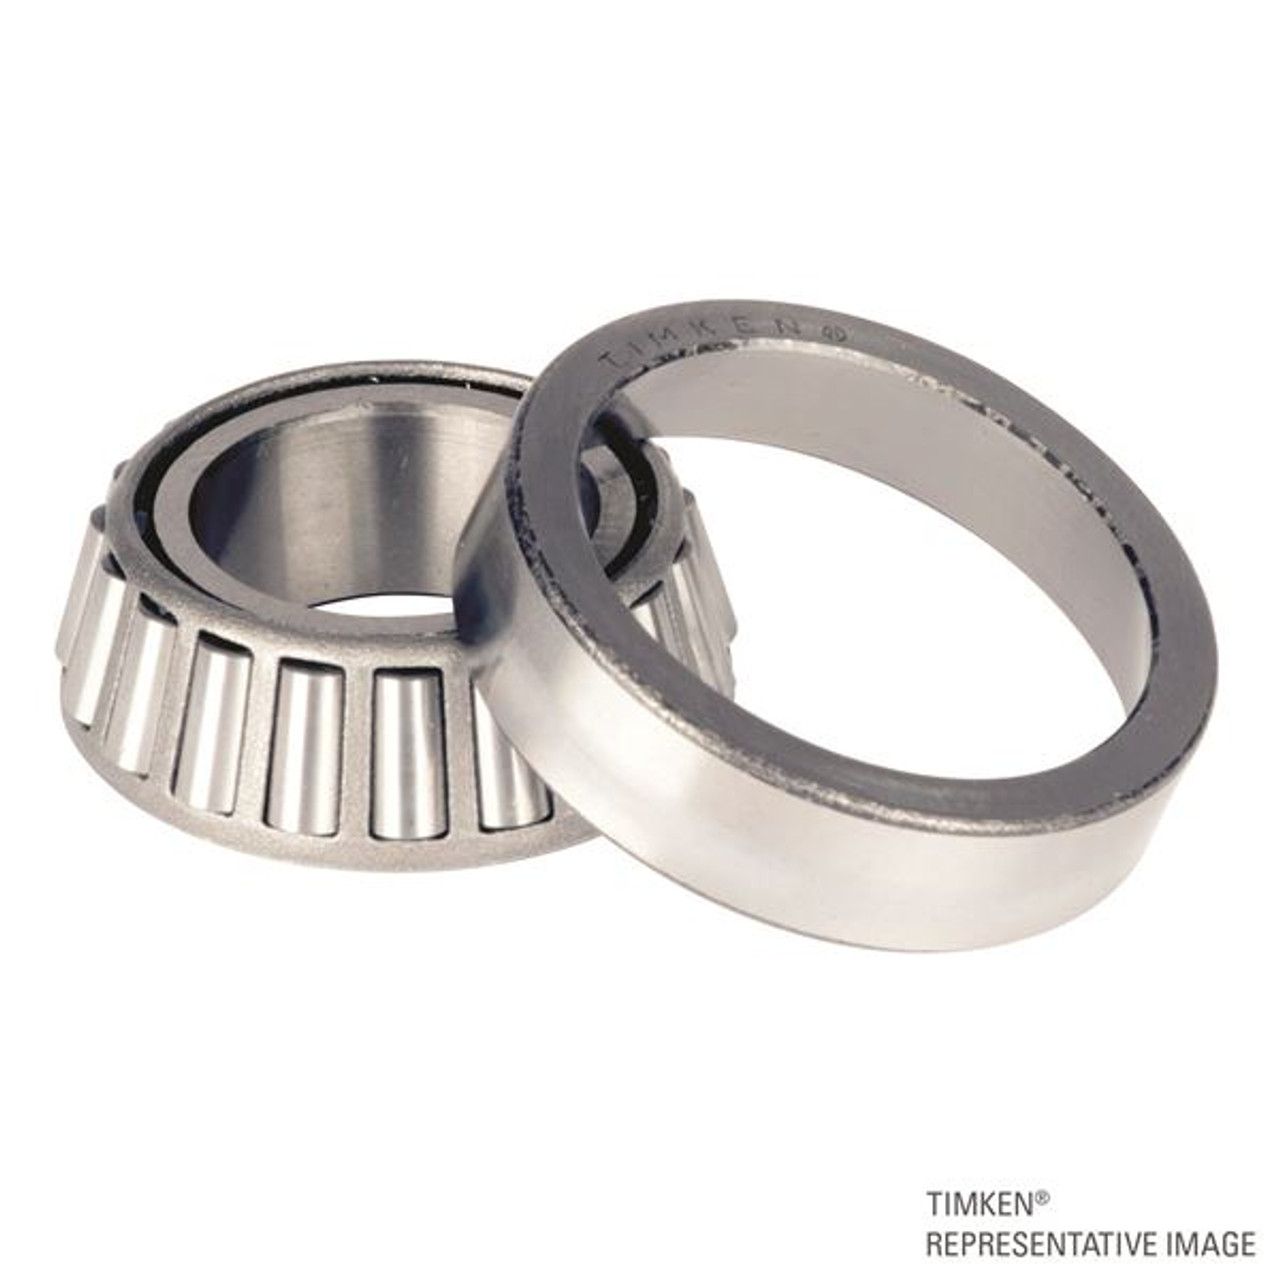 Timken® Metric Cup & Cone Assembly  XAB33212-90KA1